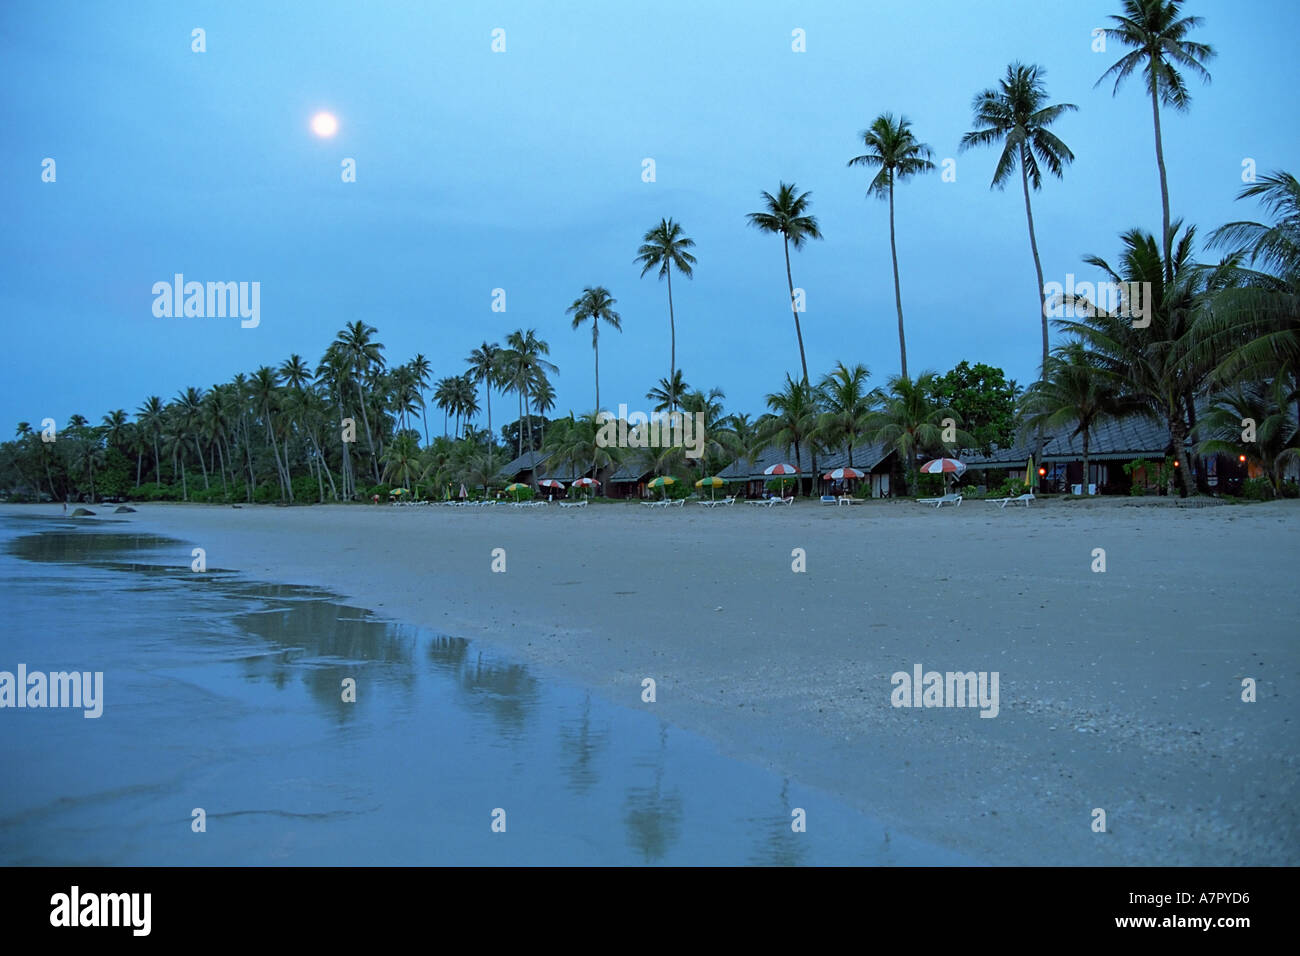 Full moon rising over the beach. Bintan island, Indonesia. Stock Photo